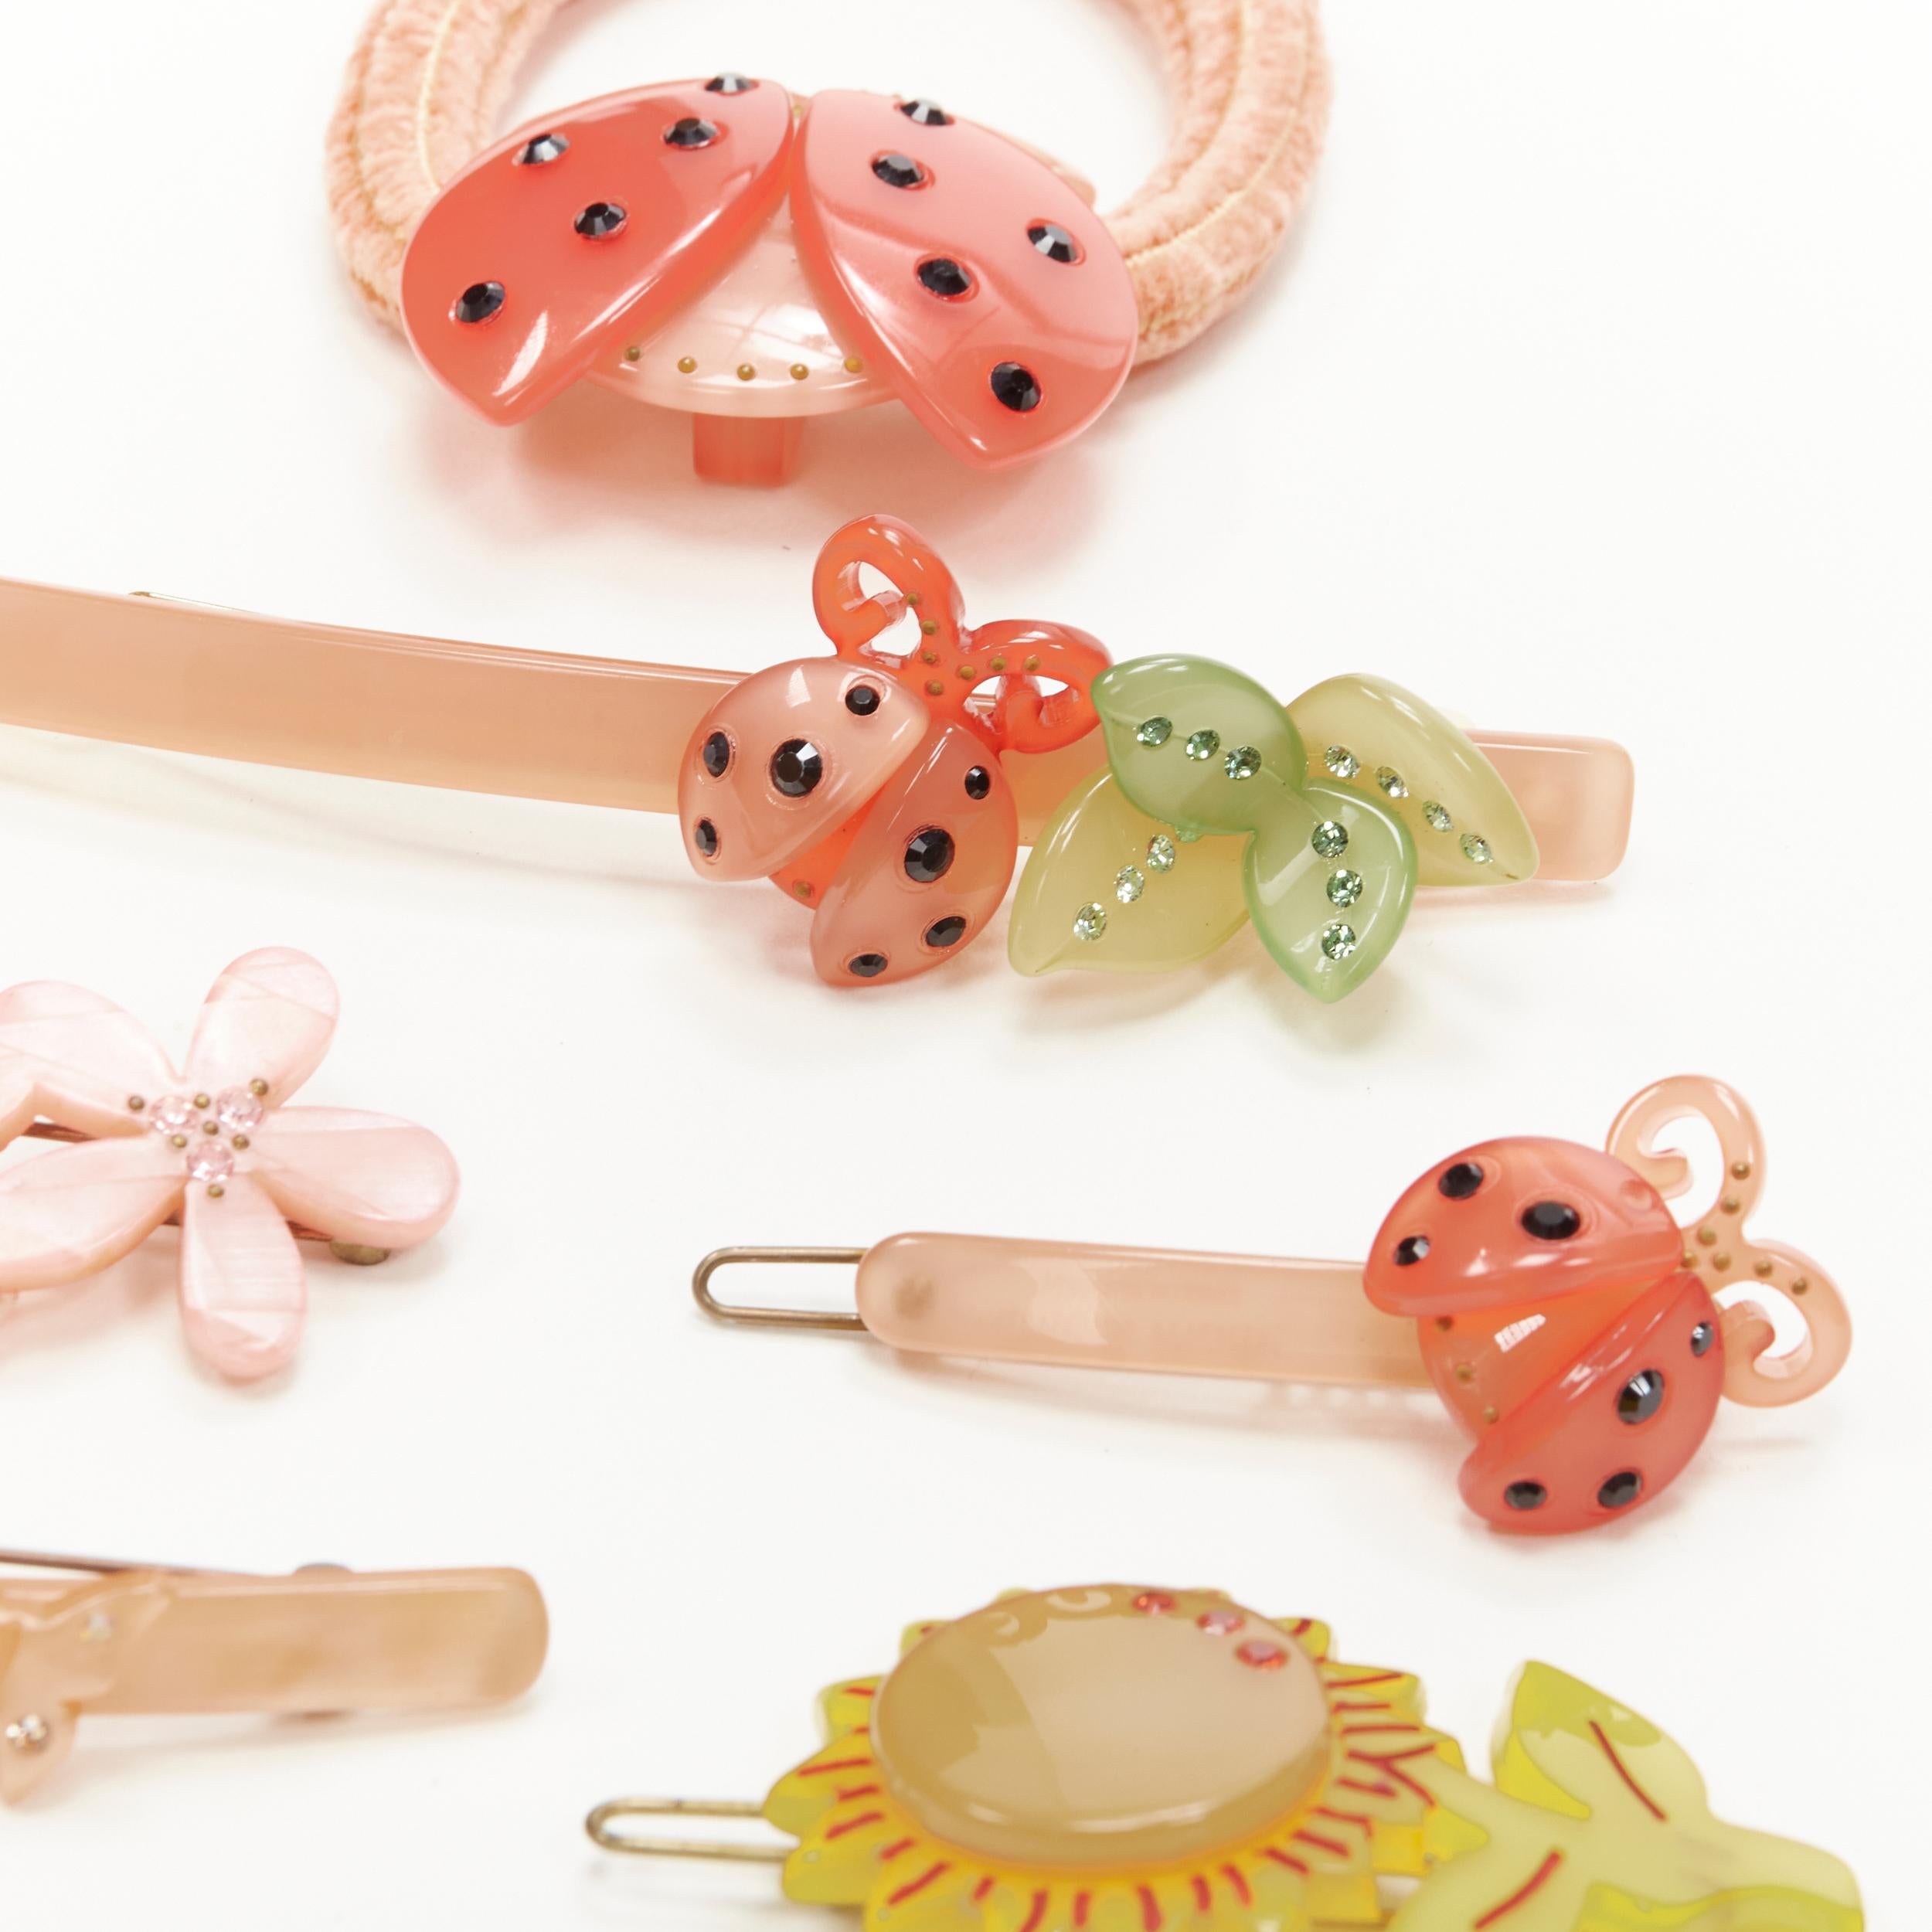 Women's CHIC & MODE Alexandre Zouari orange butterfly beetles flower hair clip tie X6 For Sale